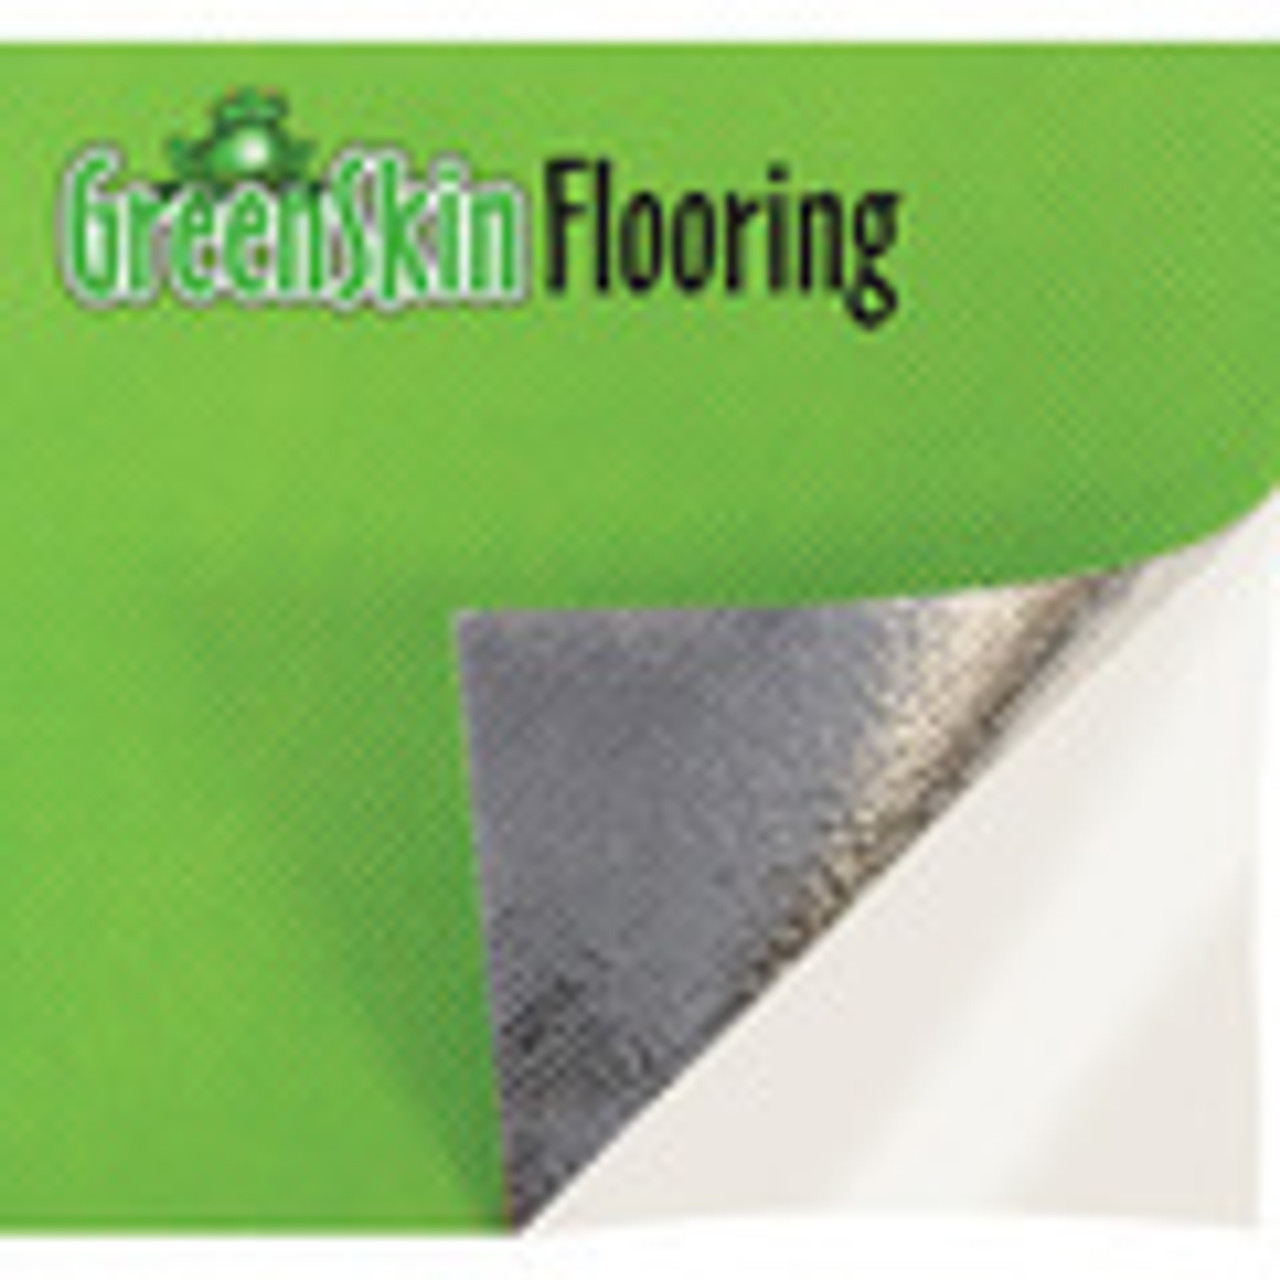 Flooring Underlayment